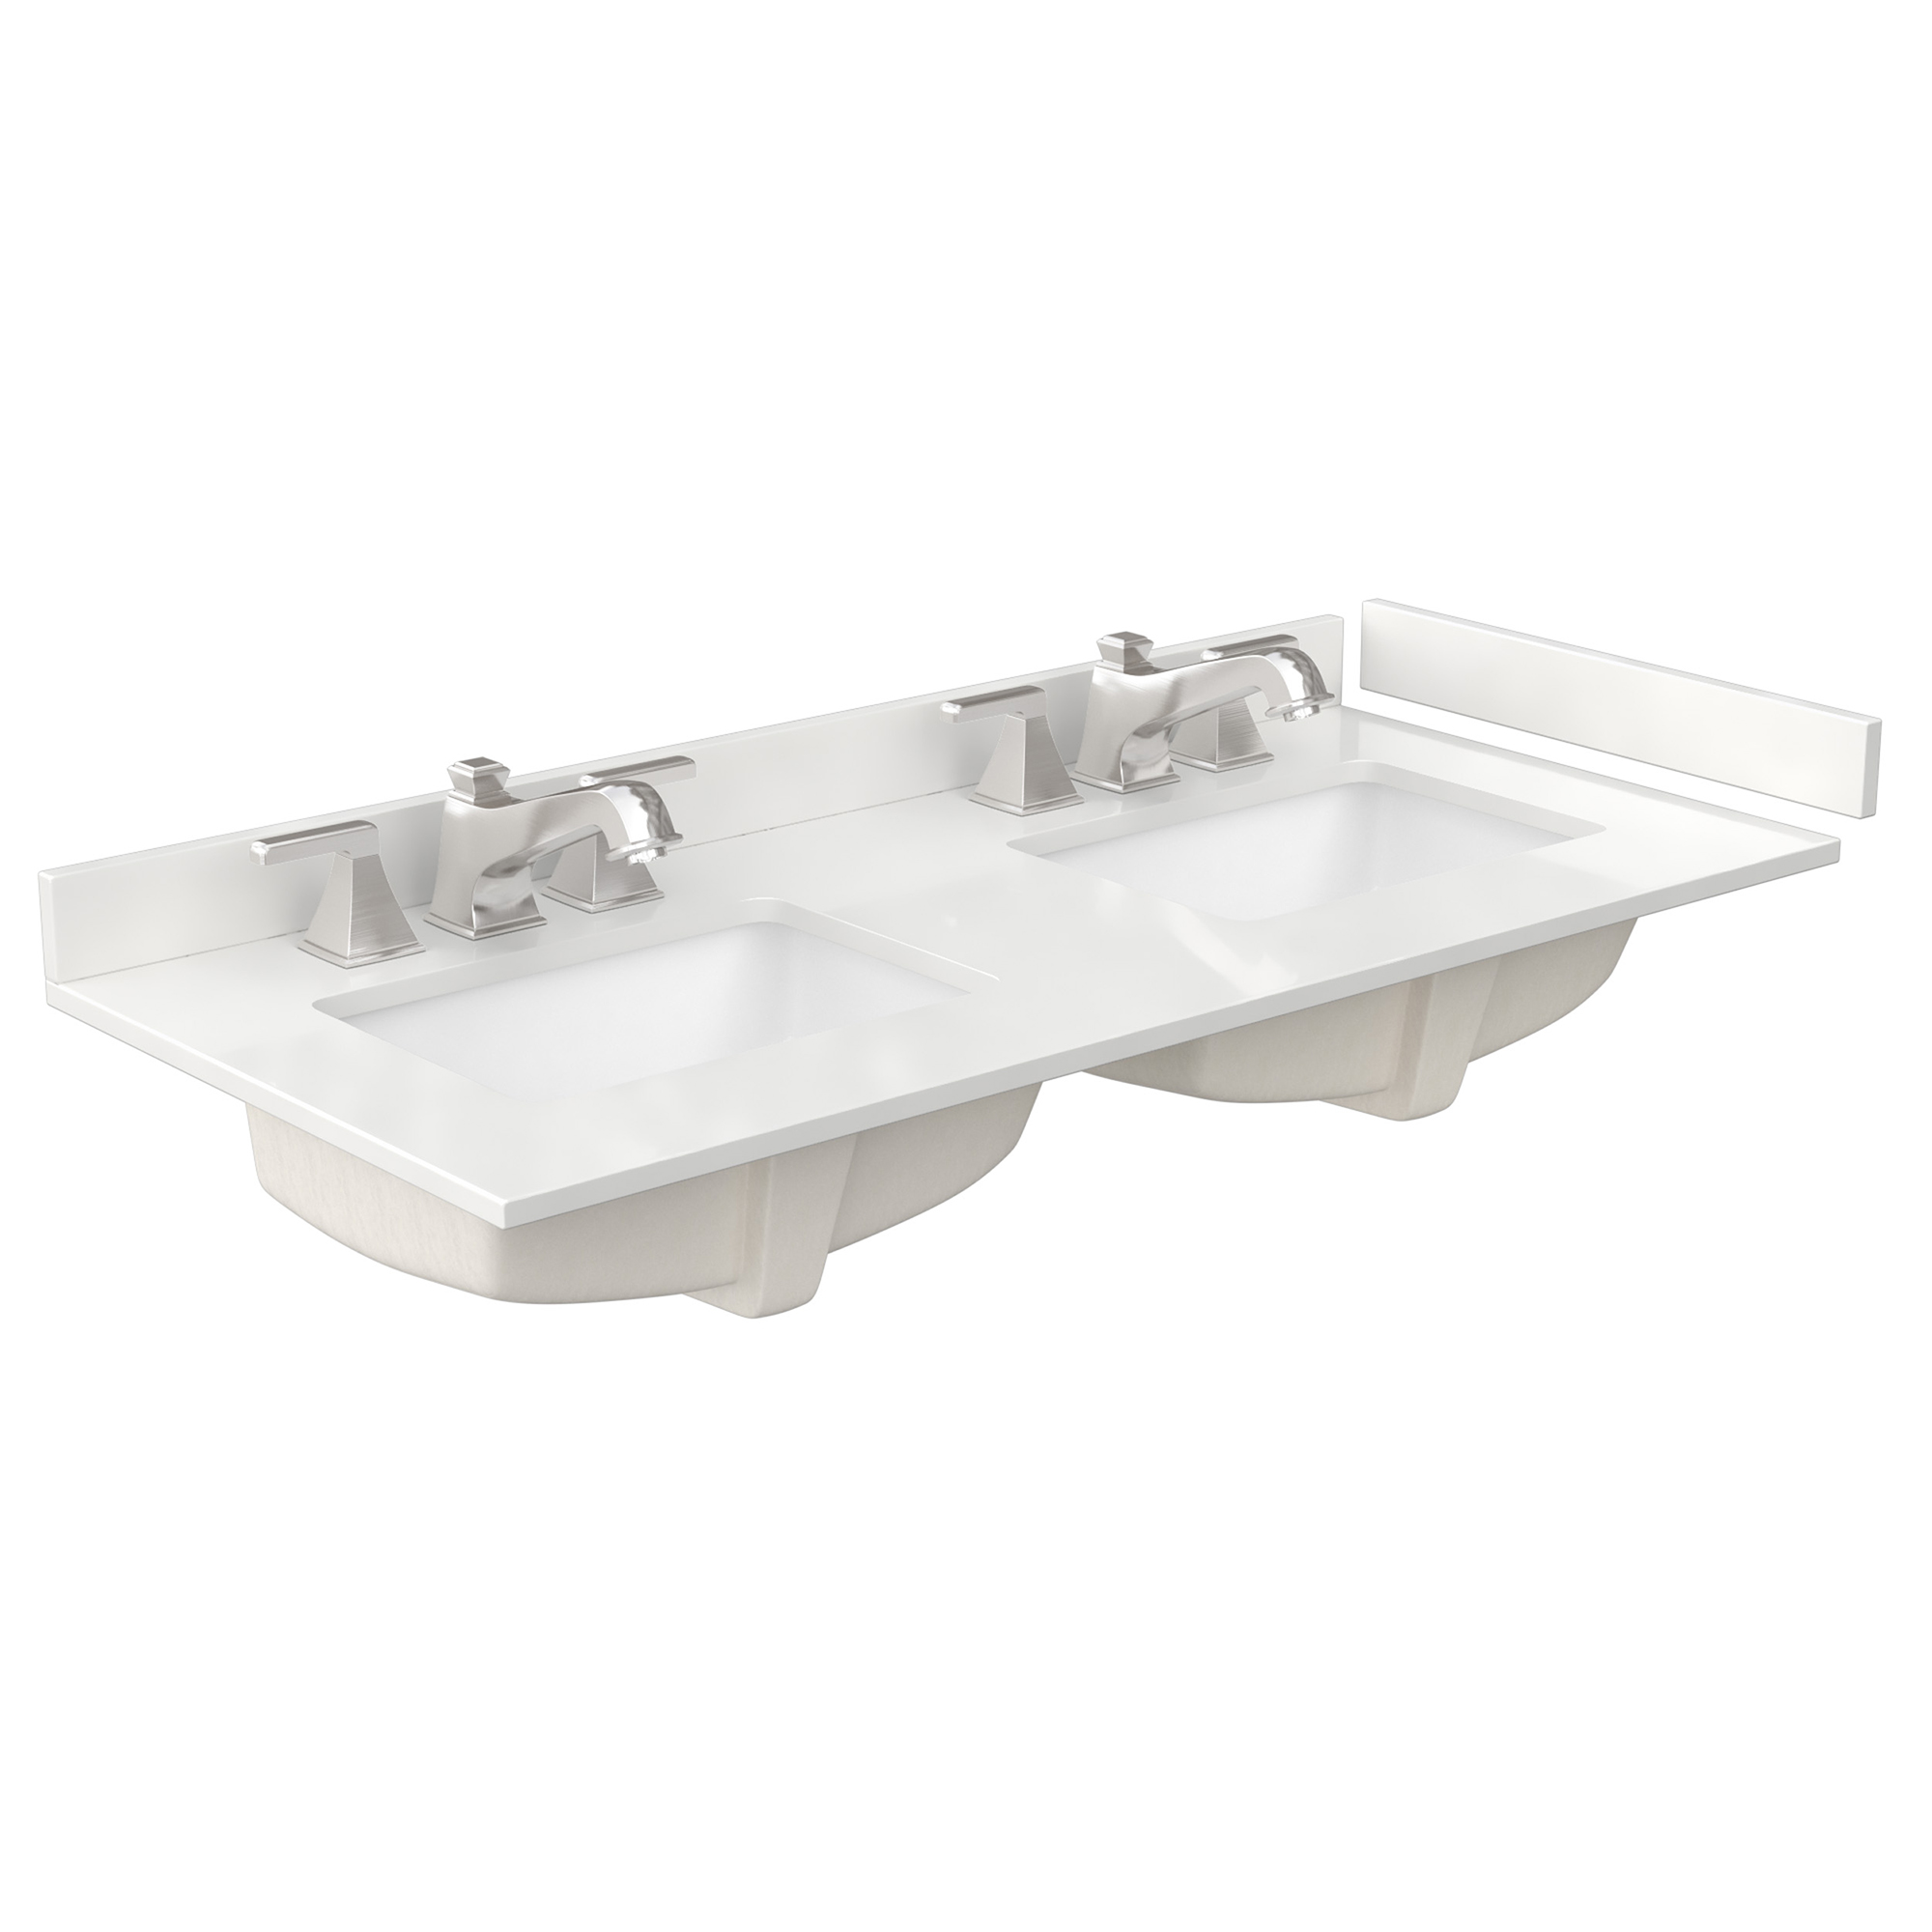 48" Double Countertop - White Quartz (1000) with Undermount Square Sink (3-Hole) - Includes Backsplash and Sidesplash WCFQC348DTOPUNSWQ